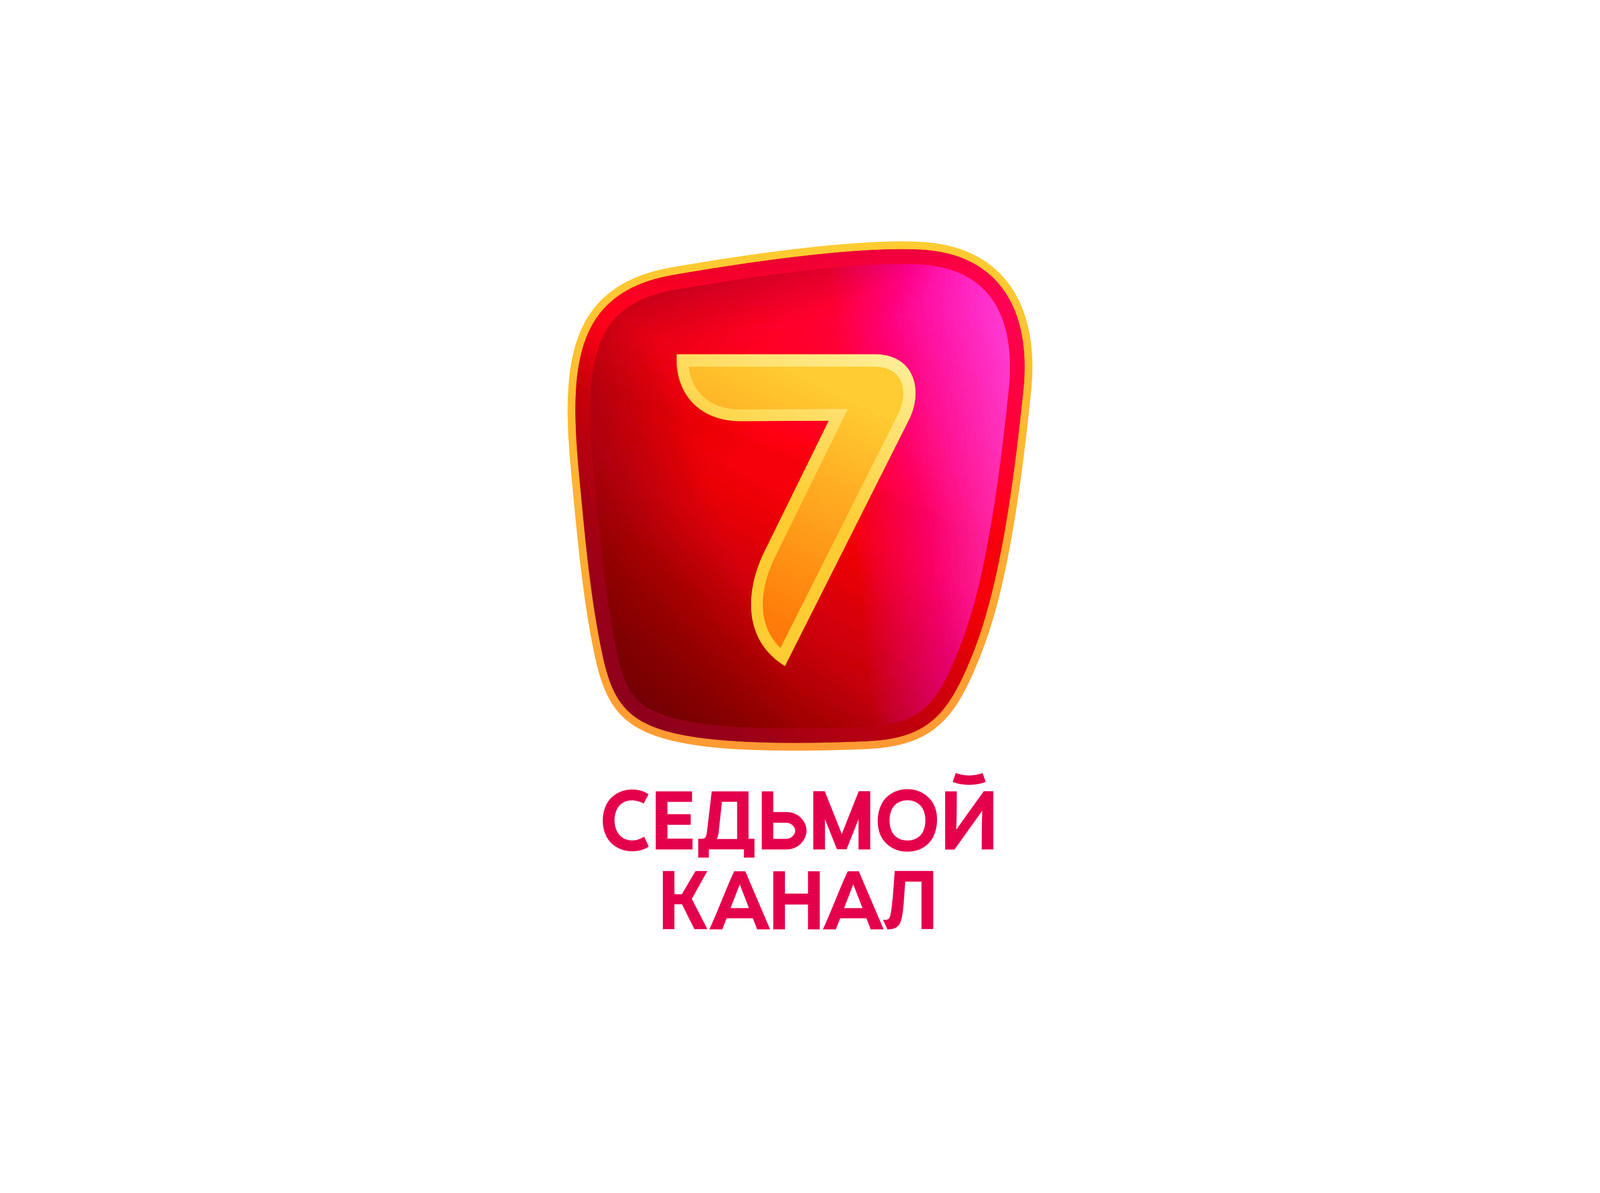 Включи 7 23. 7 Канал Казахстан. Логотипы телеканалов. Седьмой канал (Казахстан). Логотип 7 телеканала.